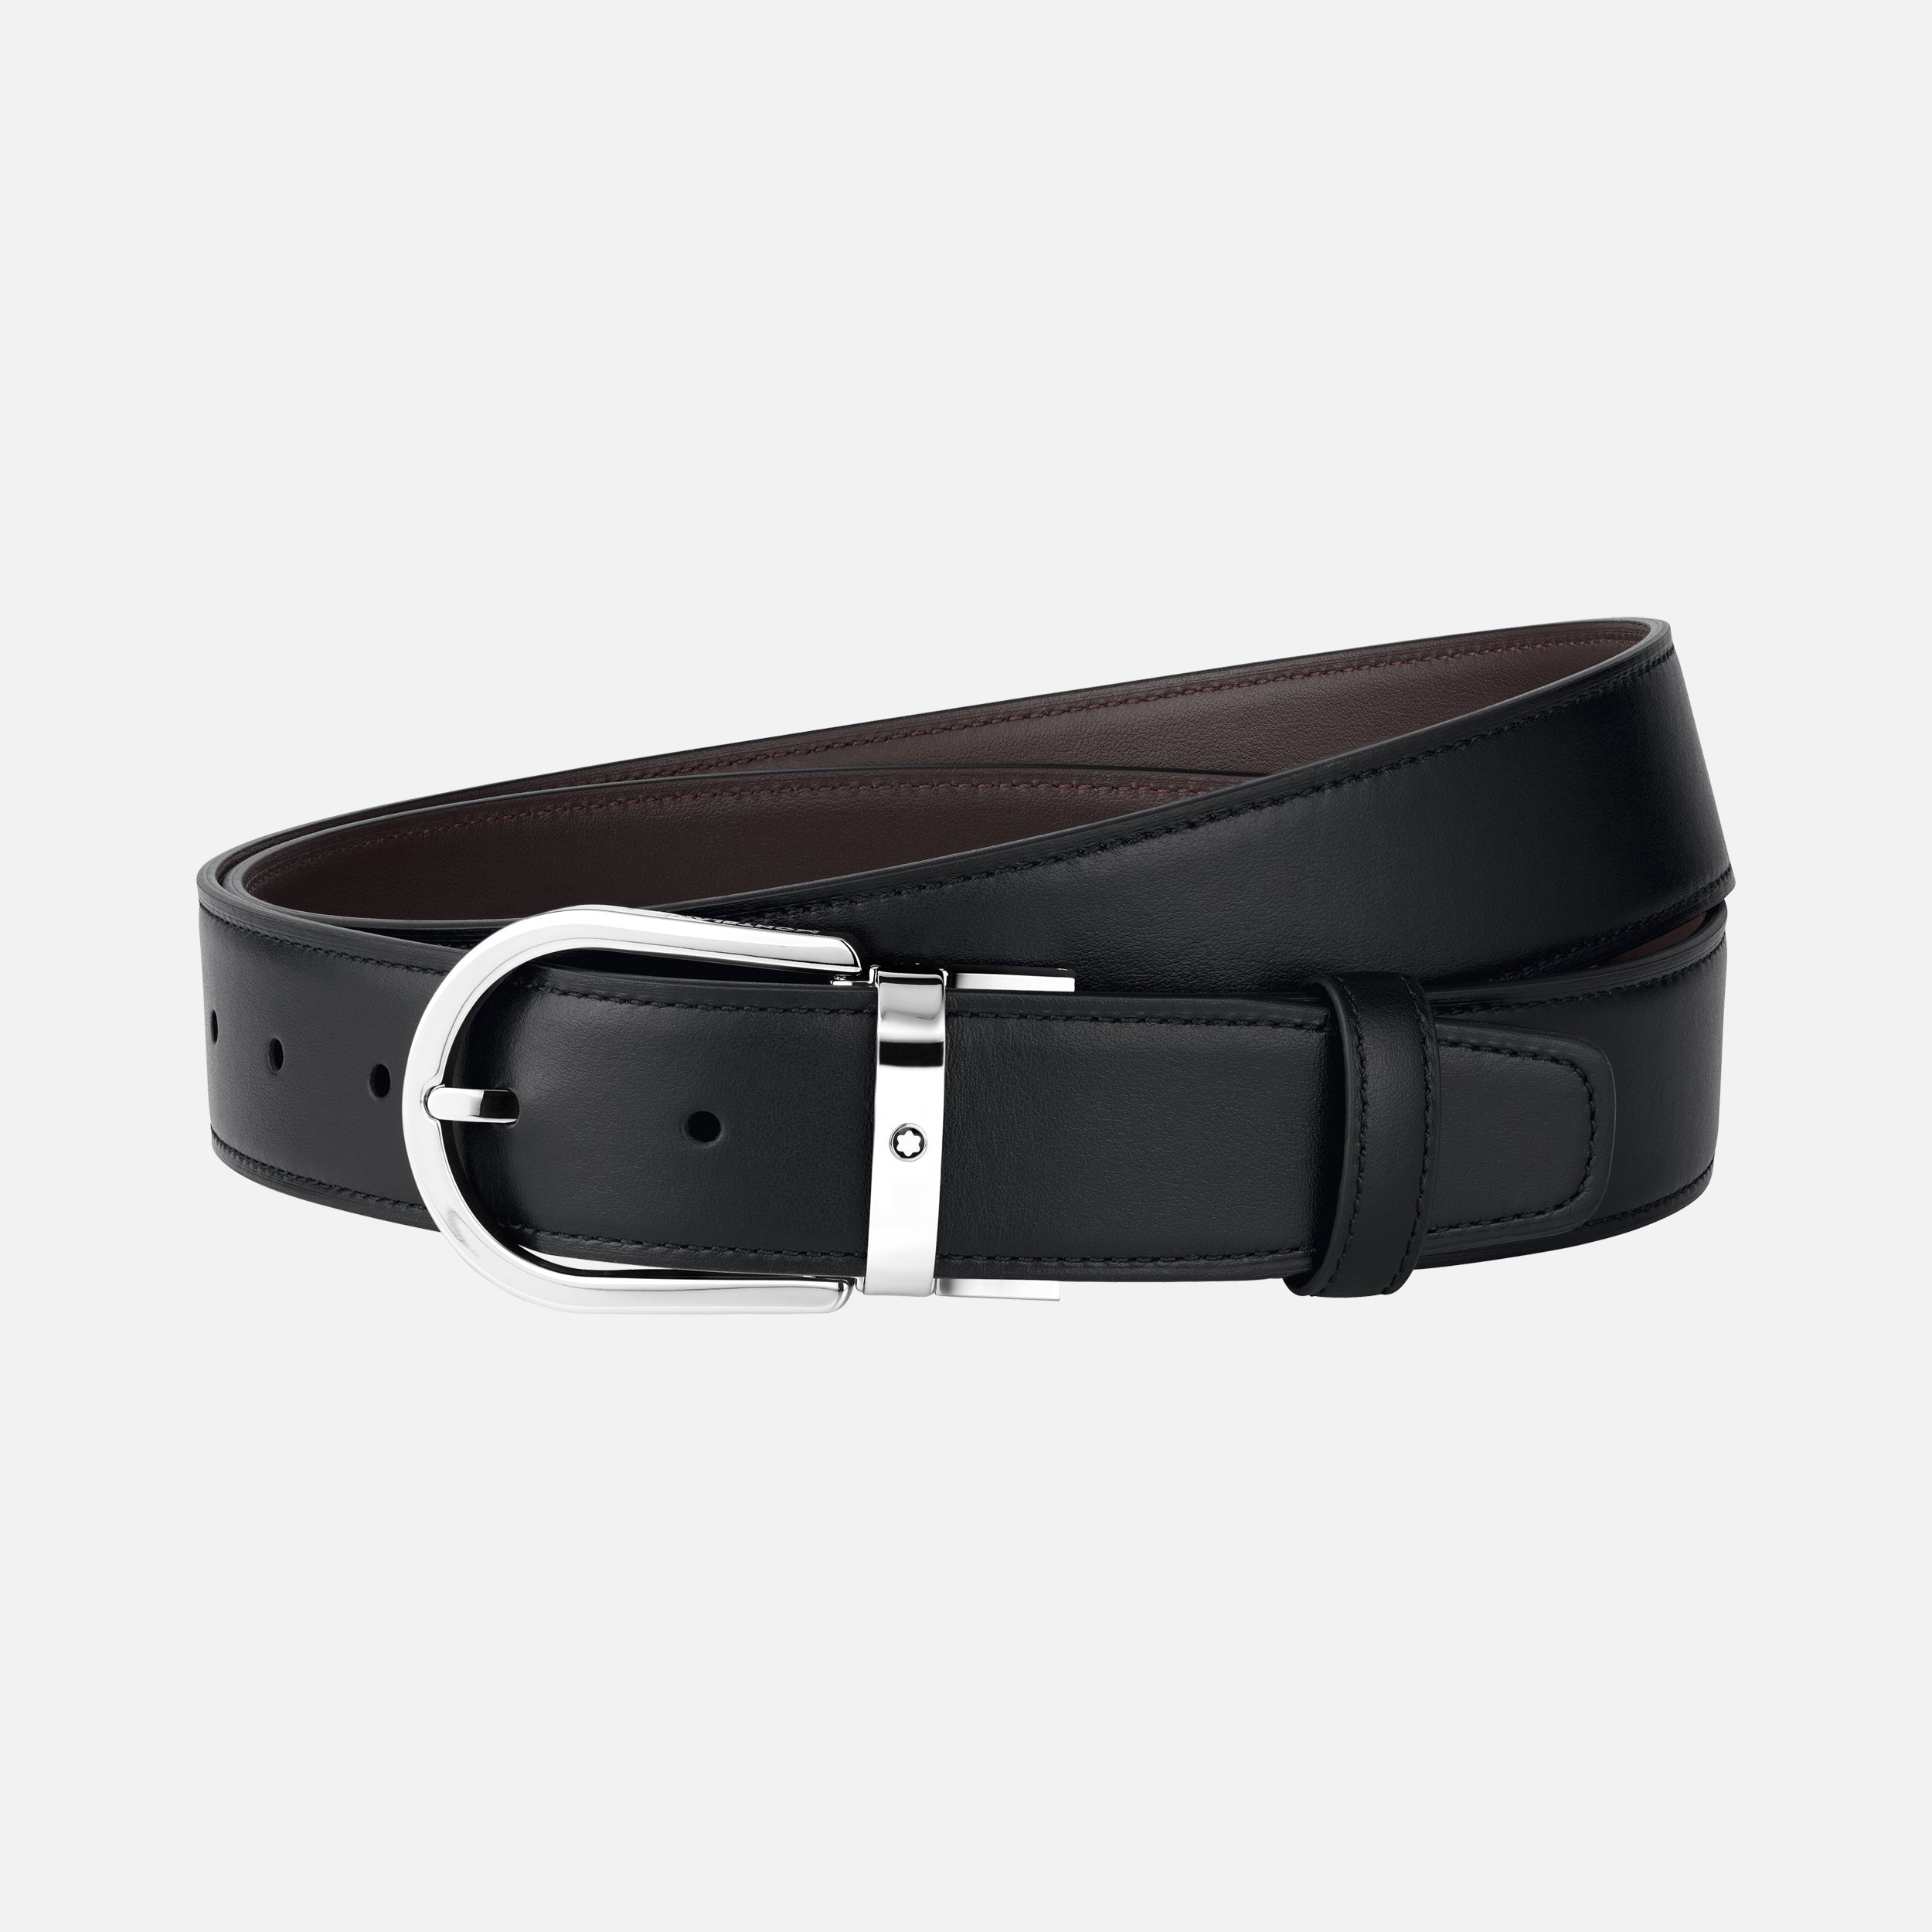 Horseshoe buckle black/tan 35 mm leather belt - 1